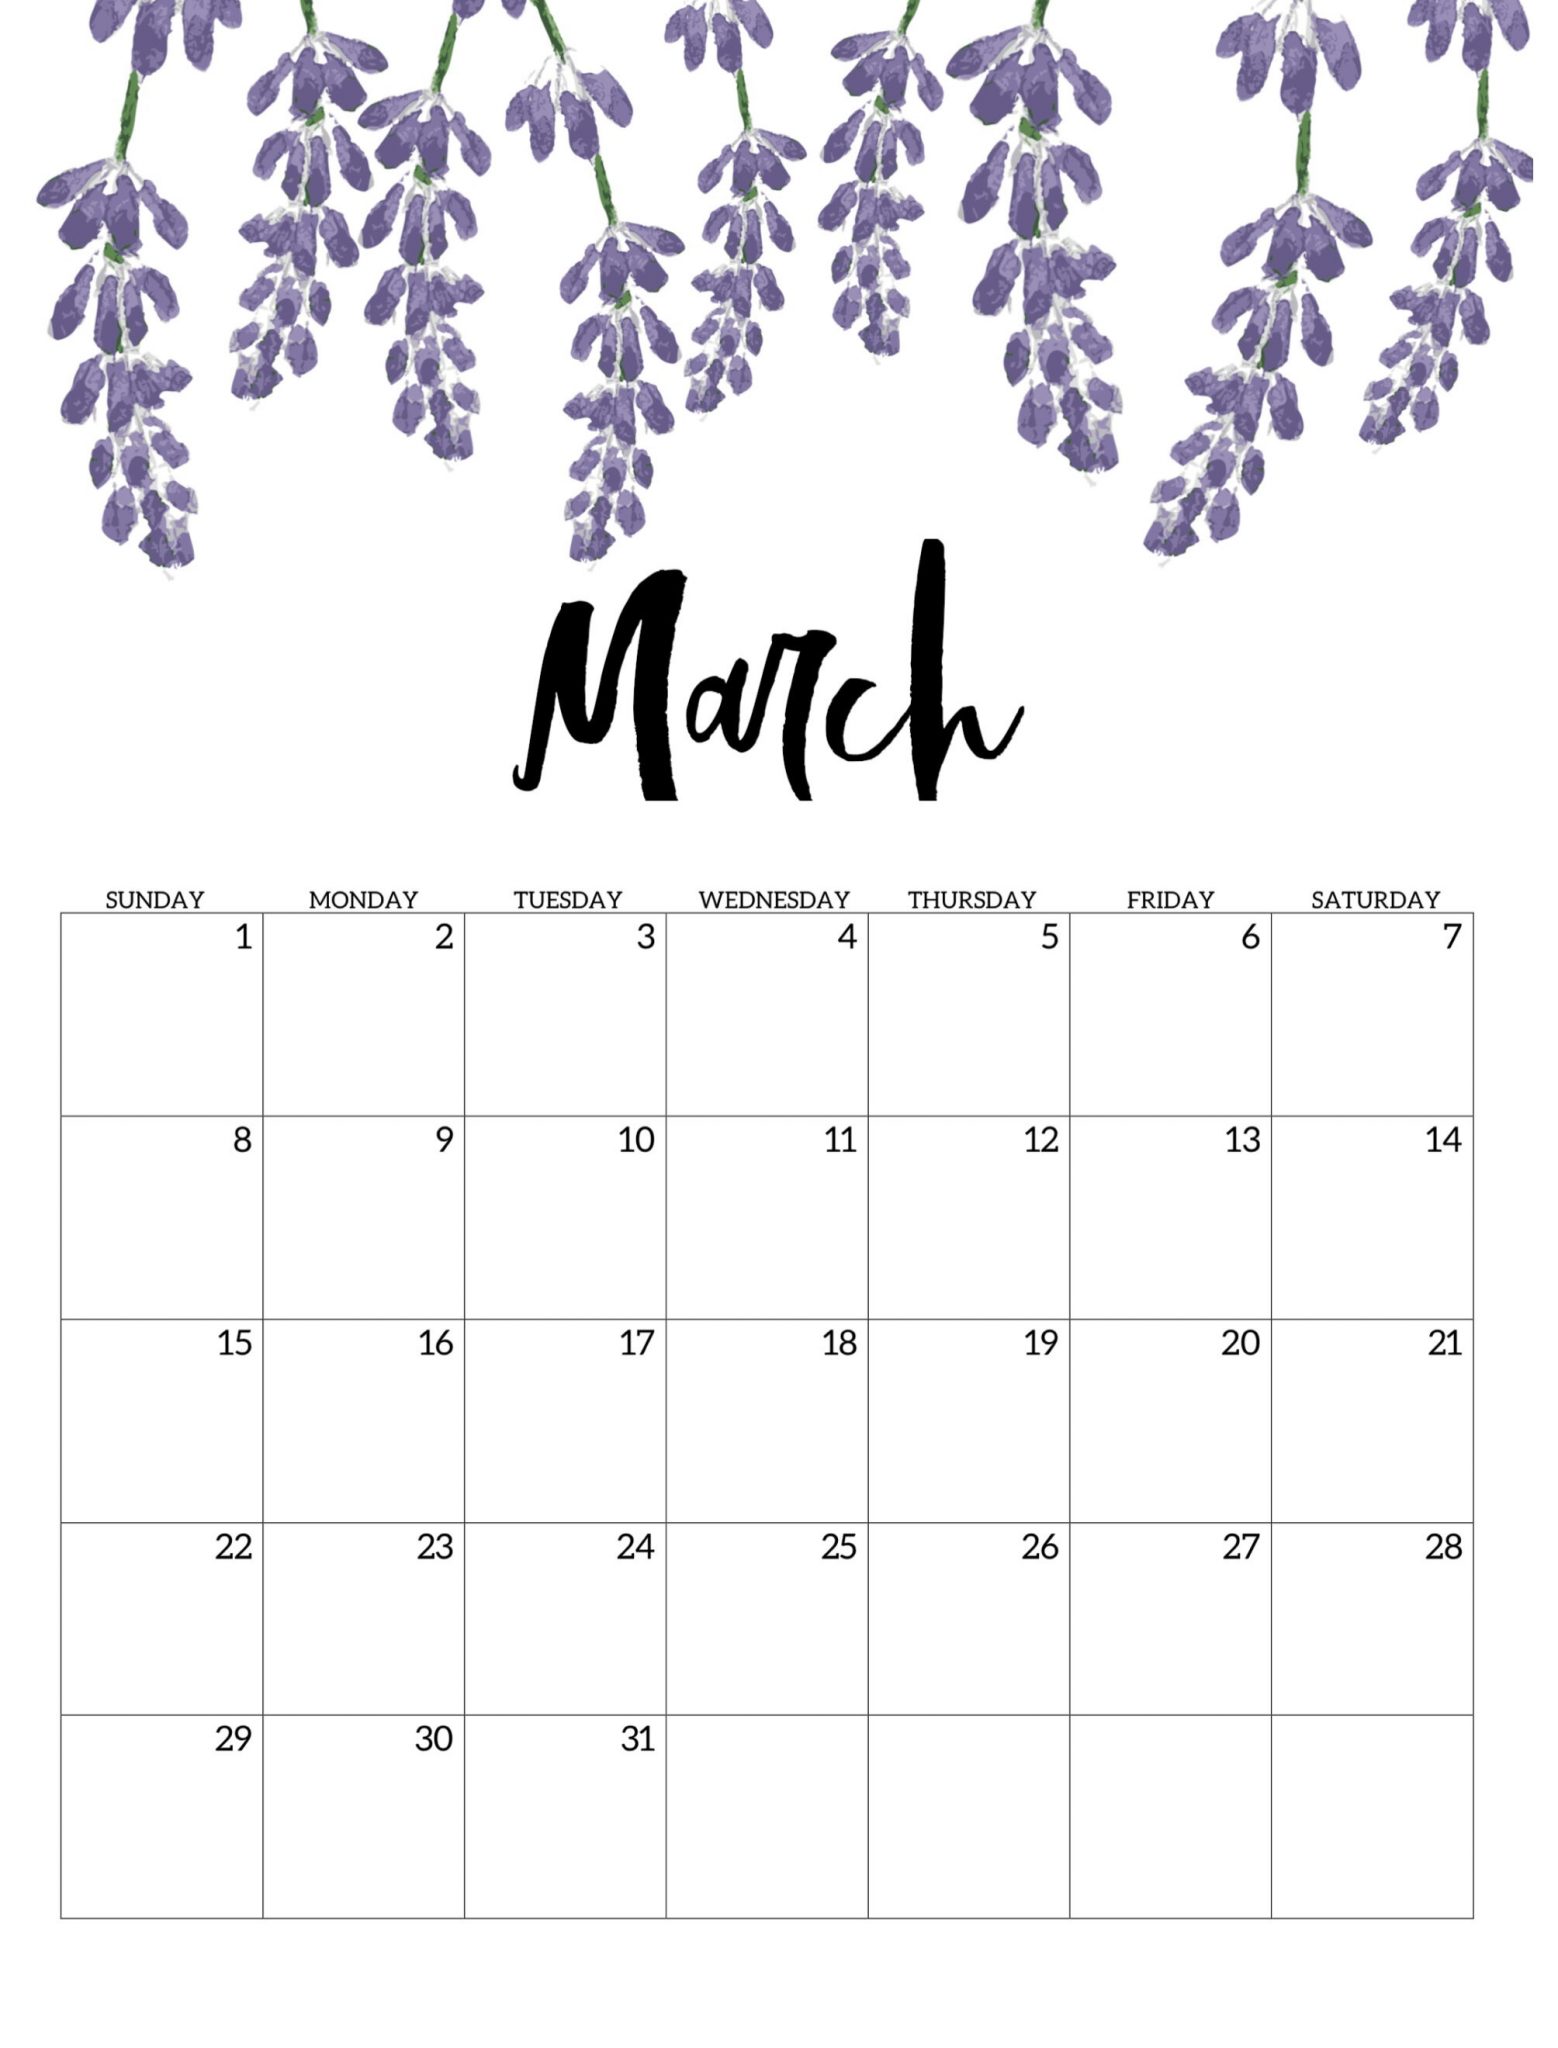 Cute March 2020 Wall Calendar